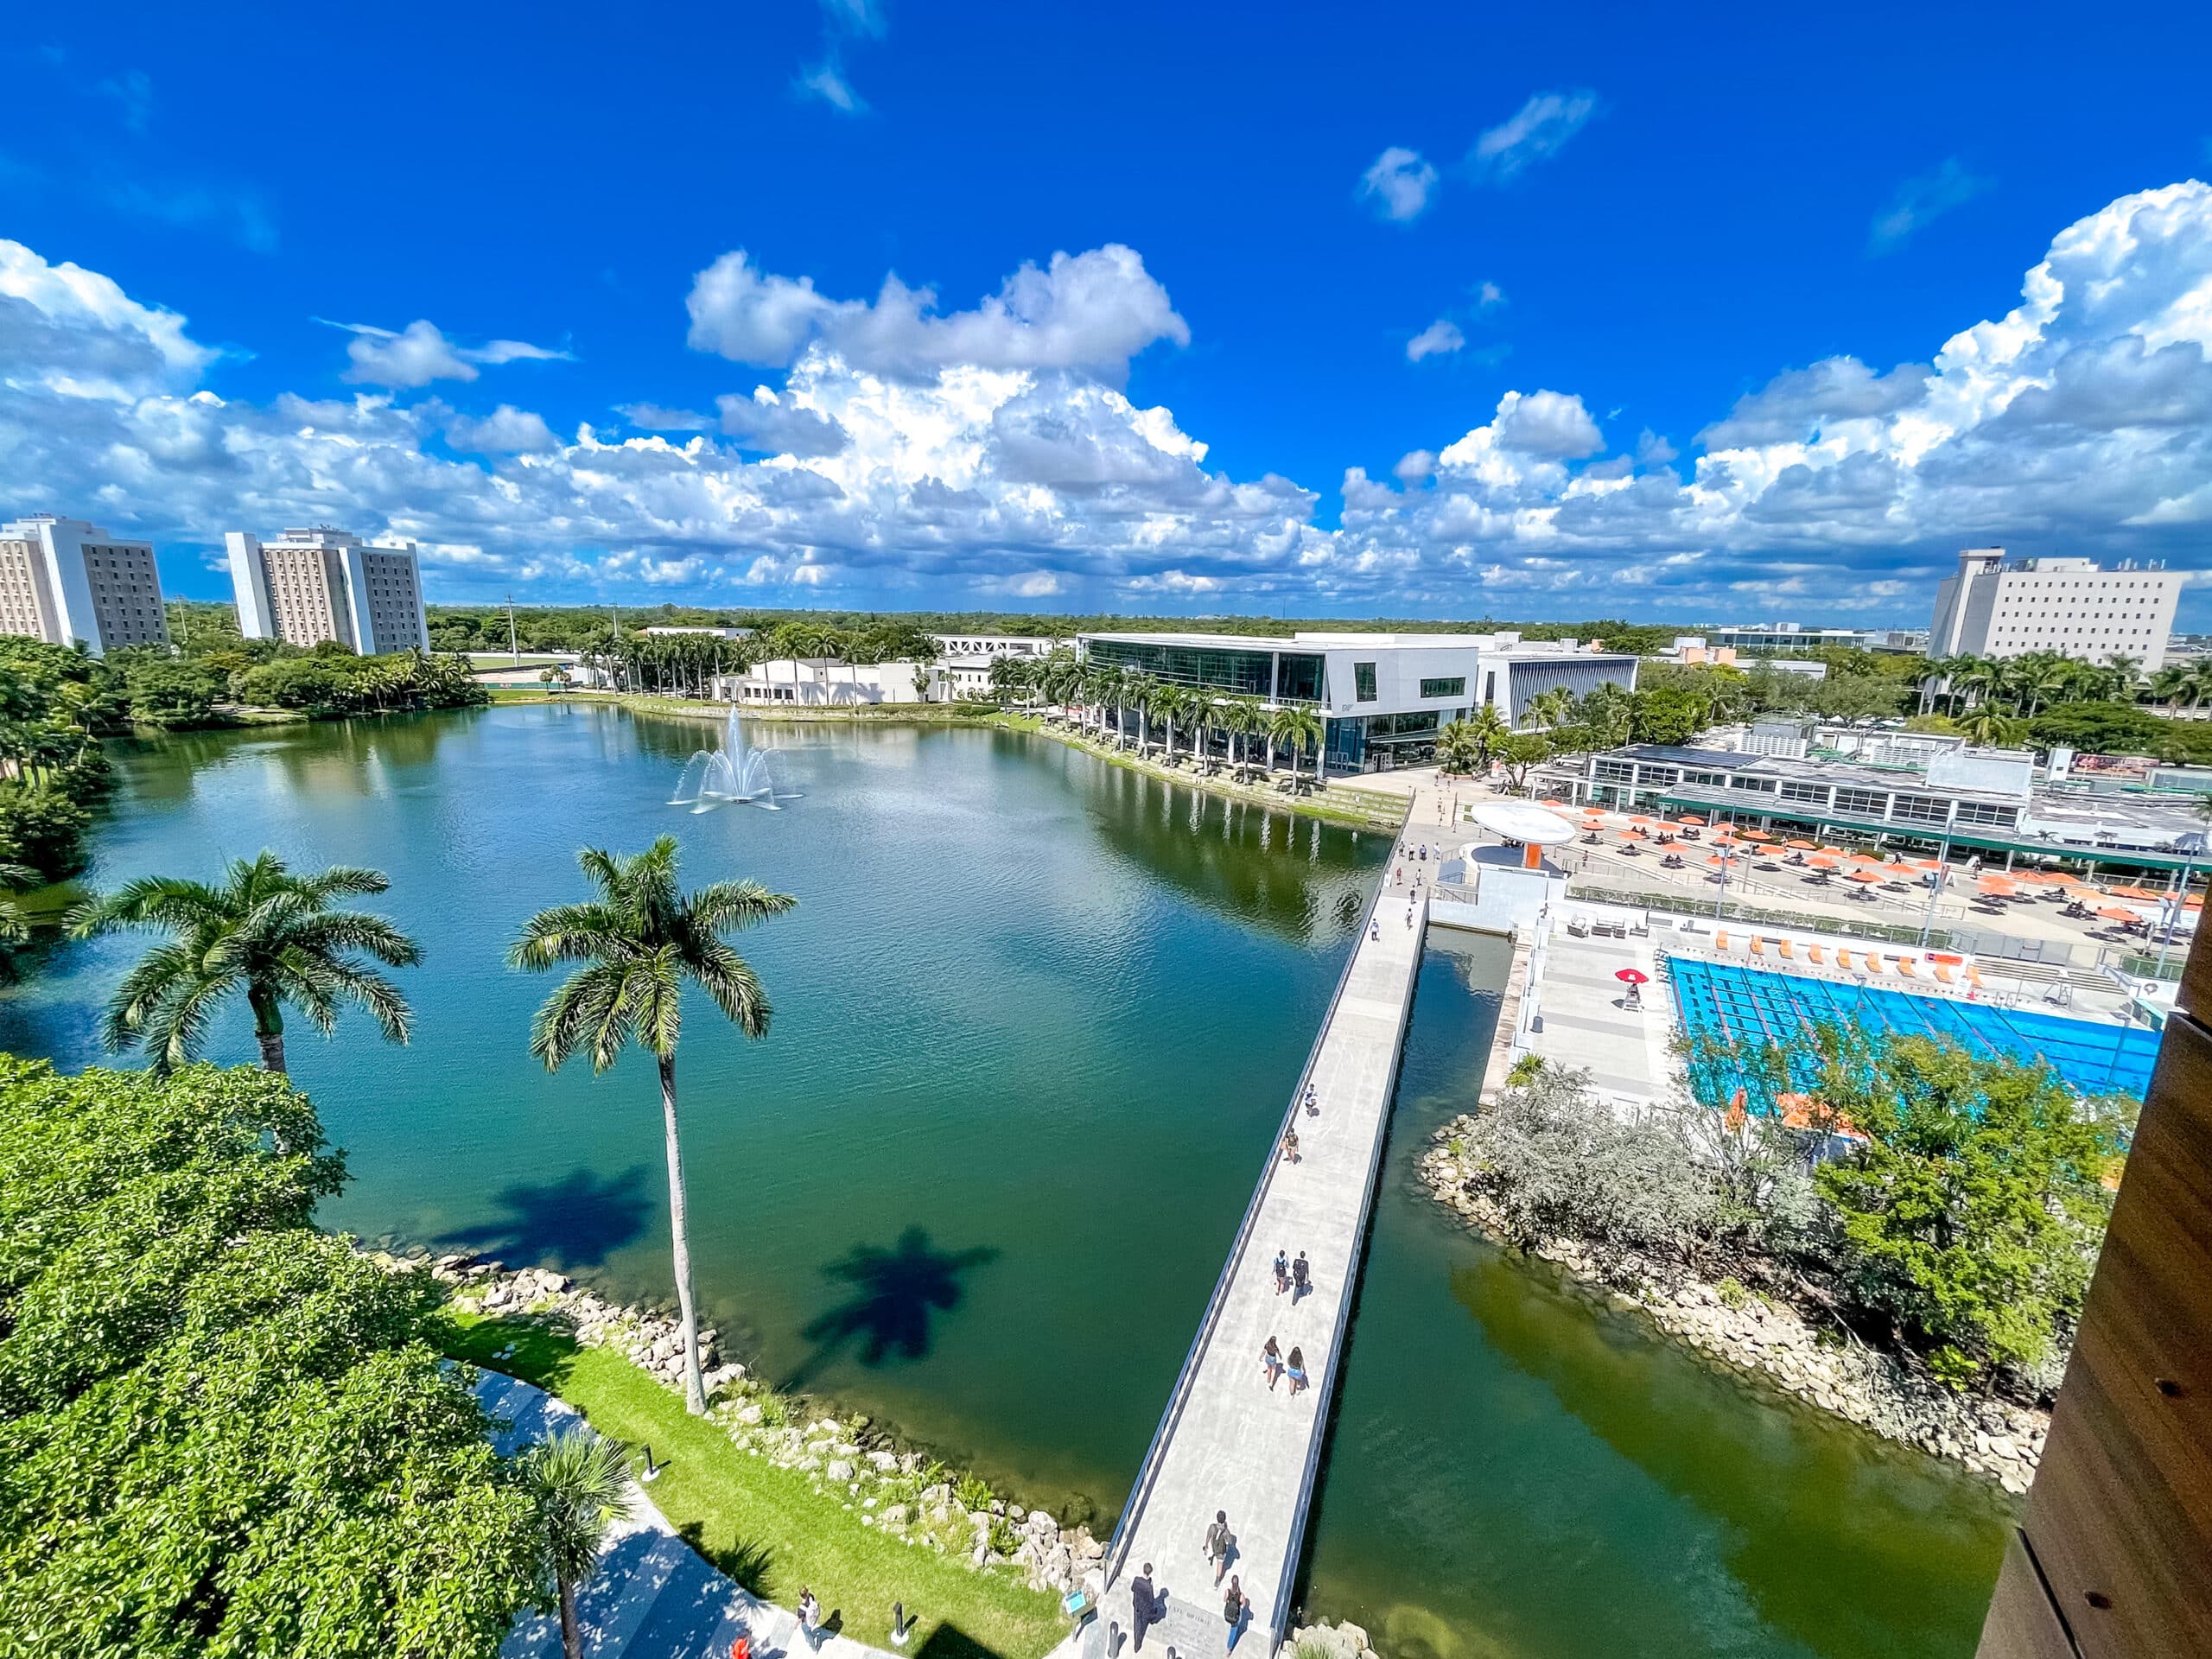 University of Miami: Unlocking the power of legal English